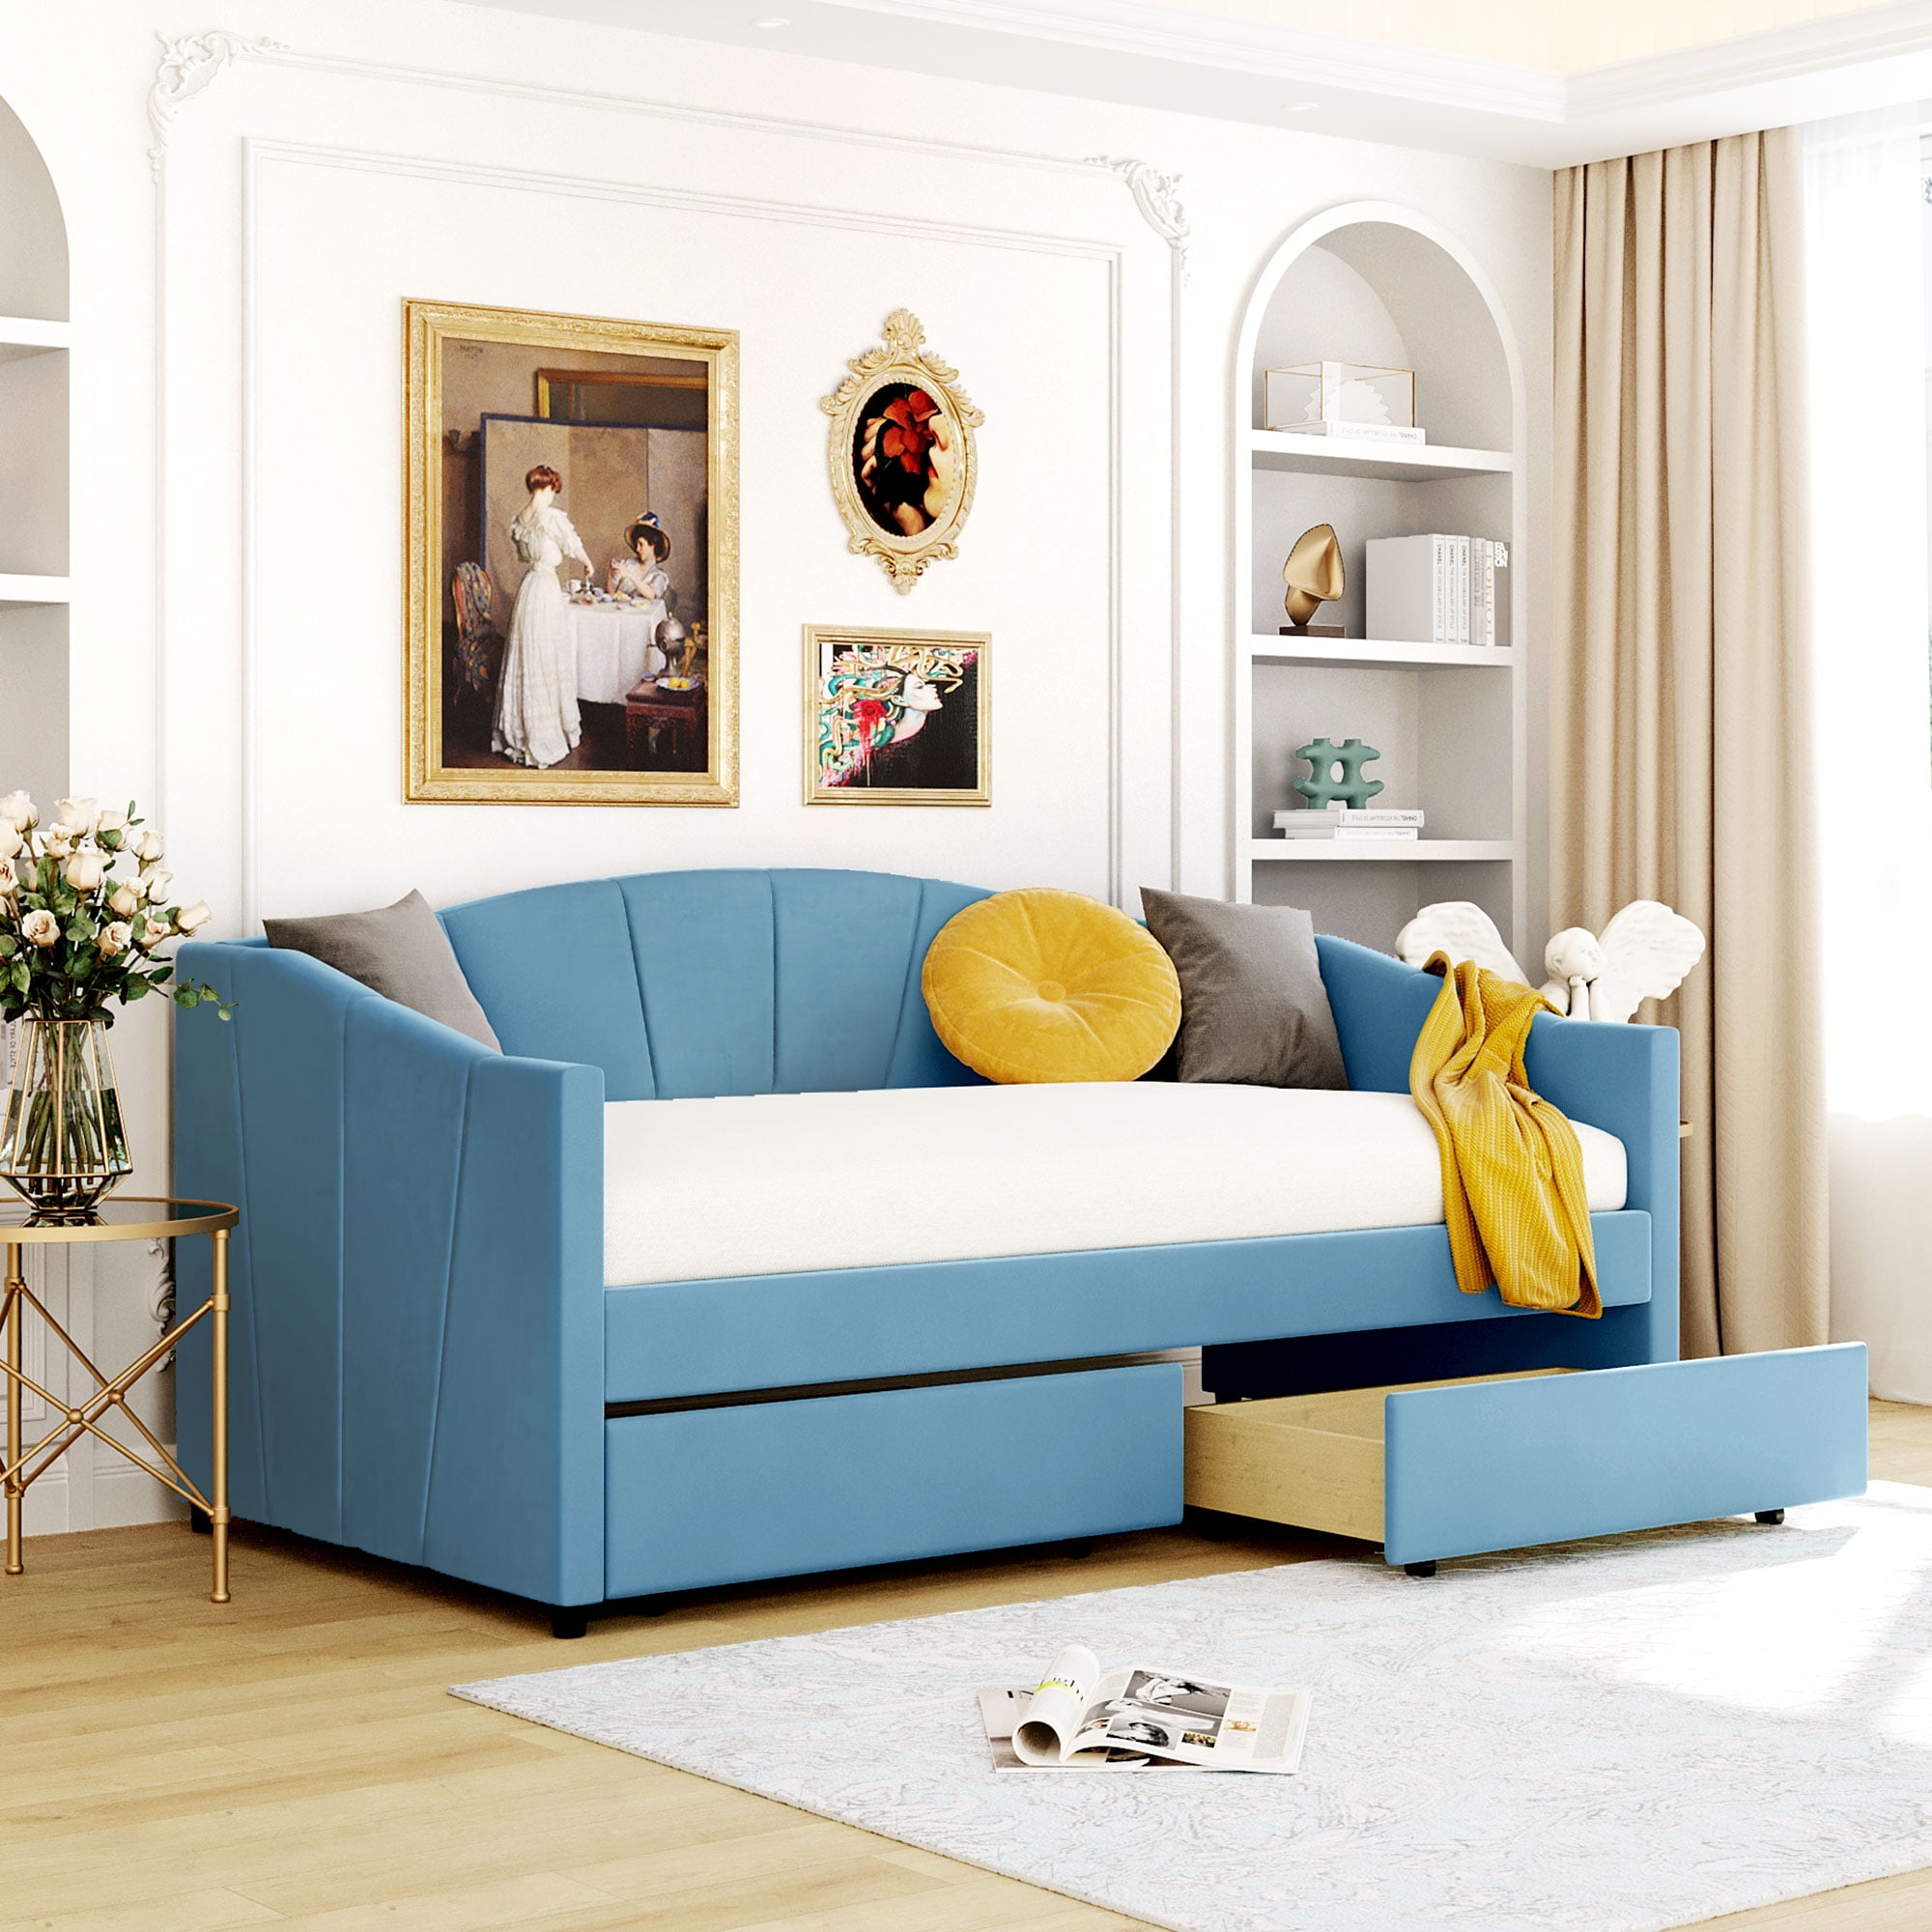 Twin Upholstered Daybed With 2 Storage Drawers Velvet Sofa Bed Solid Wood Frame Modern Leisure Soft Backrest And Armrest For Living Room Bedroom No Box Spring Needed Blue